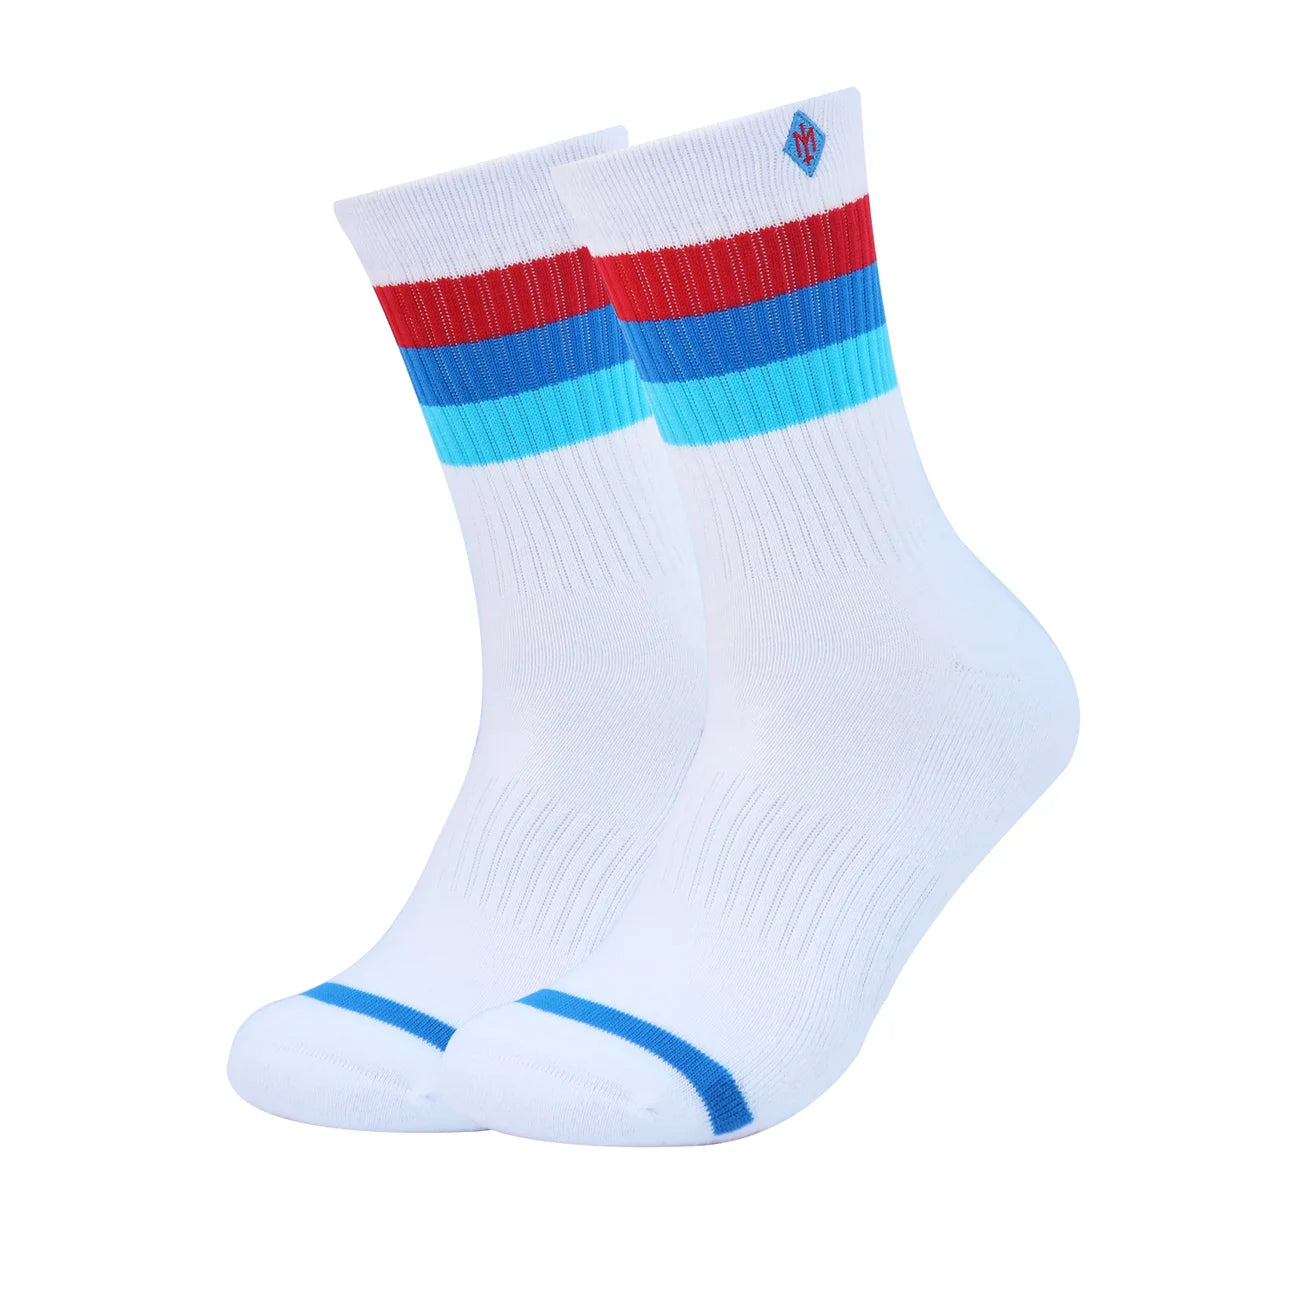 Meraki ‘Old Skool’ Socks